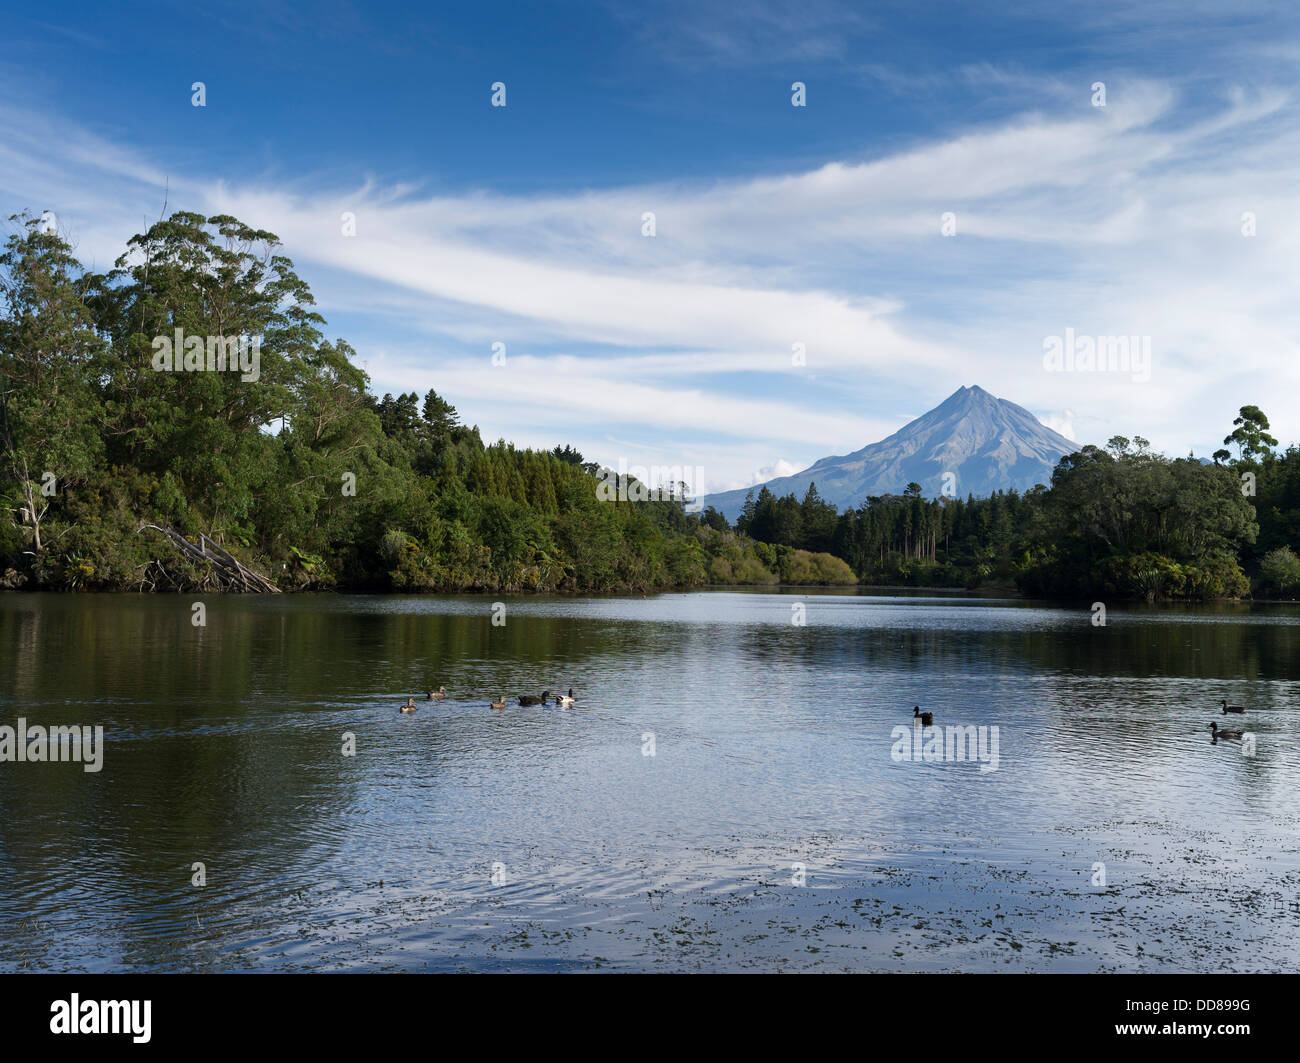 dh Lake Mangamahoe TARANAKI NEW ZEALAND Mount Egmont Mt Taranaki ducks in lake Stock Photo